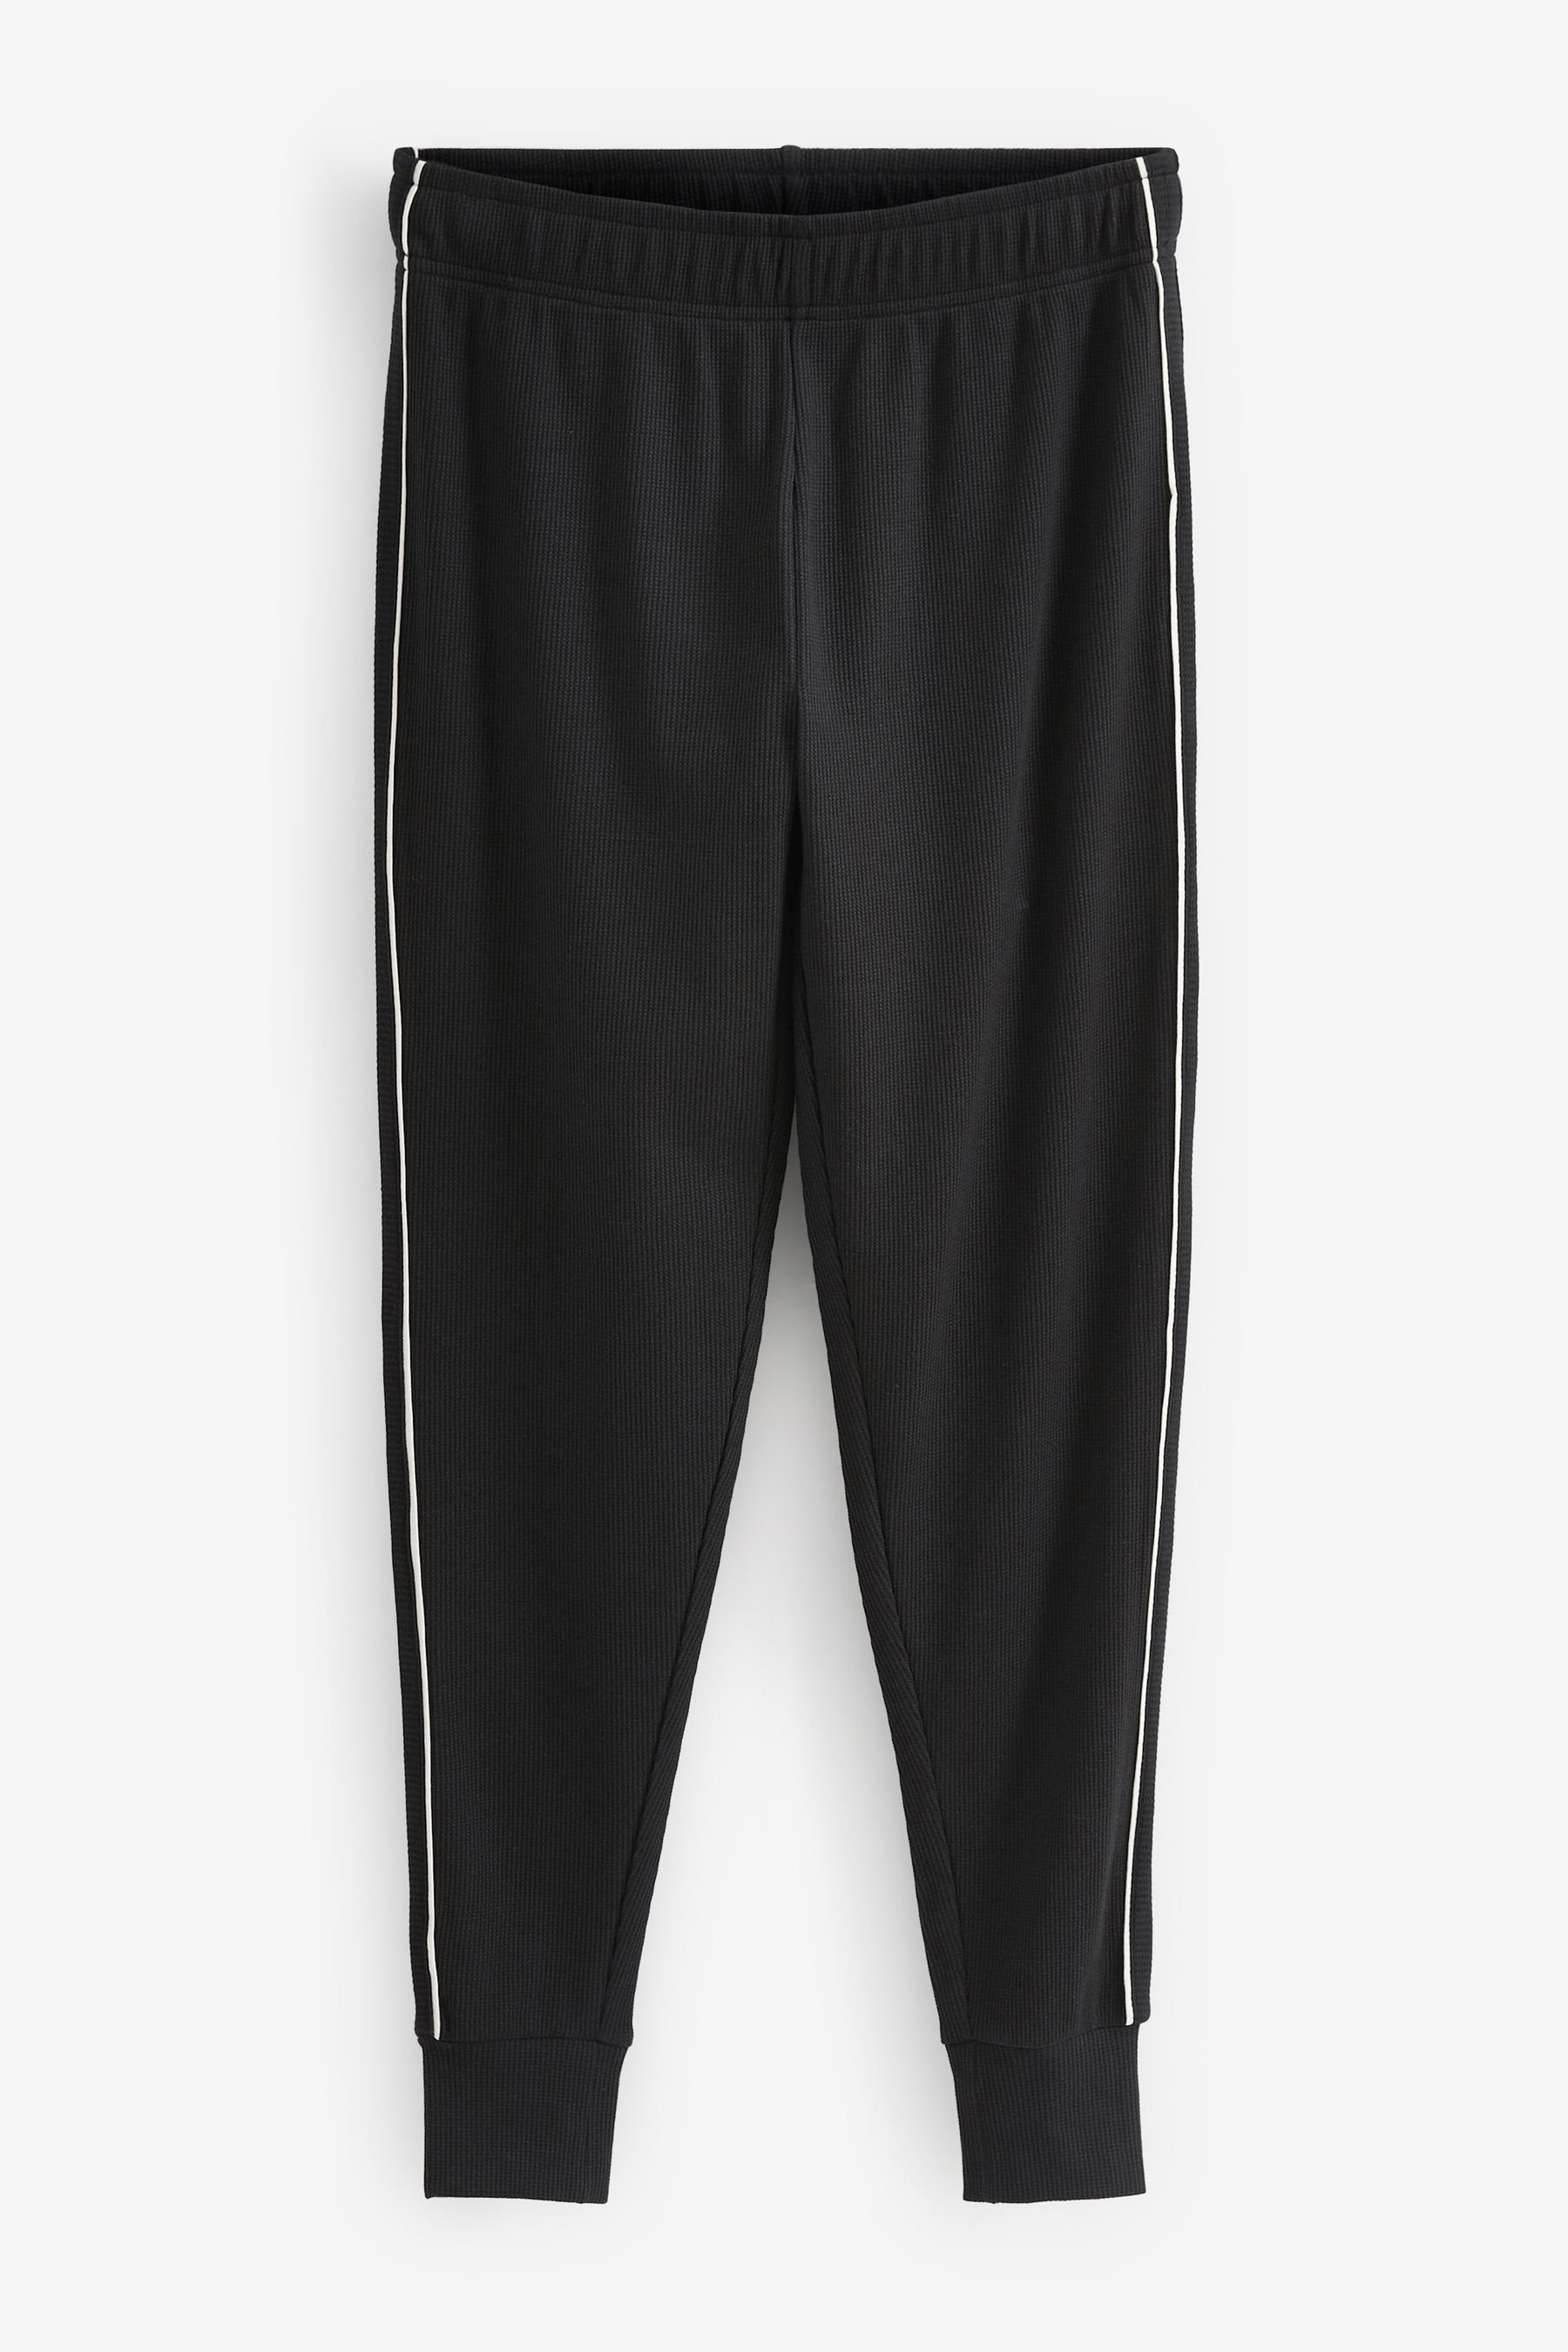 tlg) mit Baumwollmix Pyjama Black Next Schlafanzug aus Waffelstruktur (2